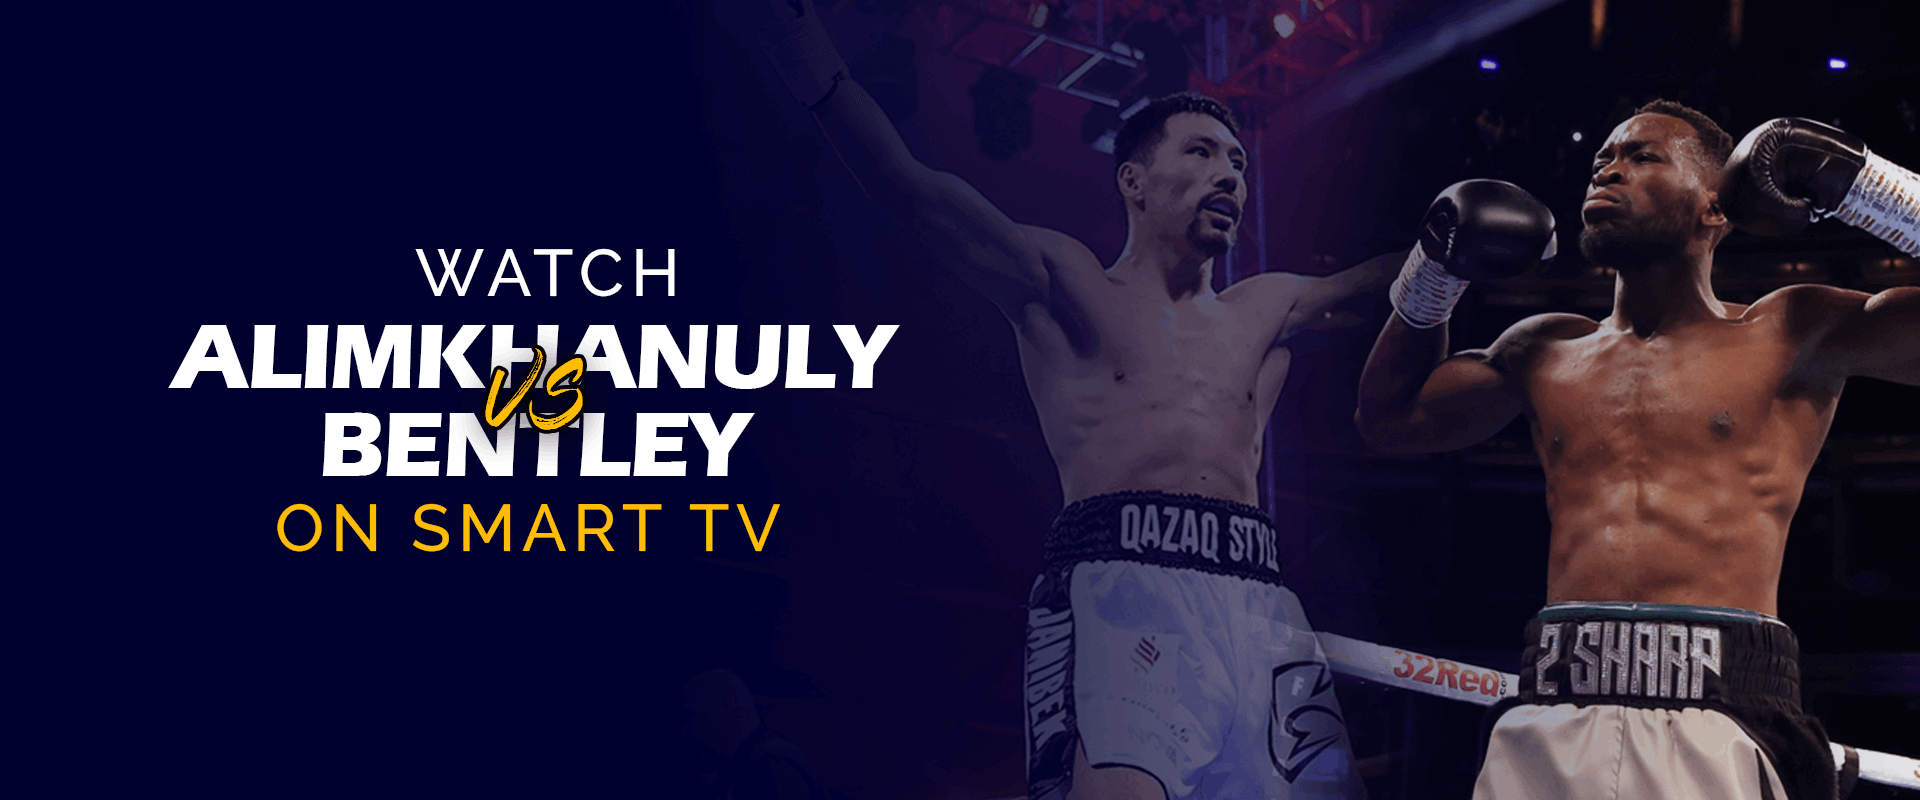 Smart TV'de Janibek Alimkhanuly - Denzel Bentley maçını izleyin